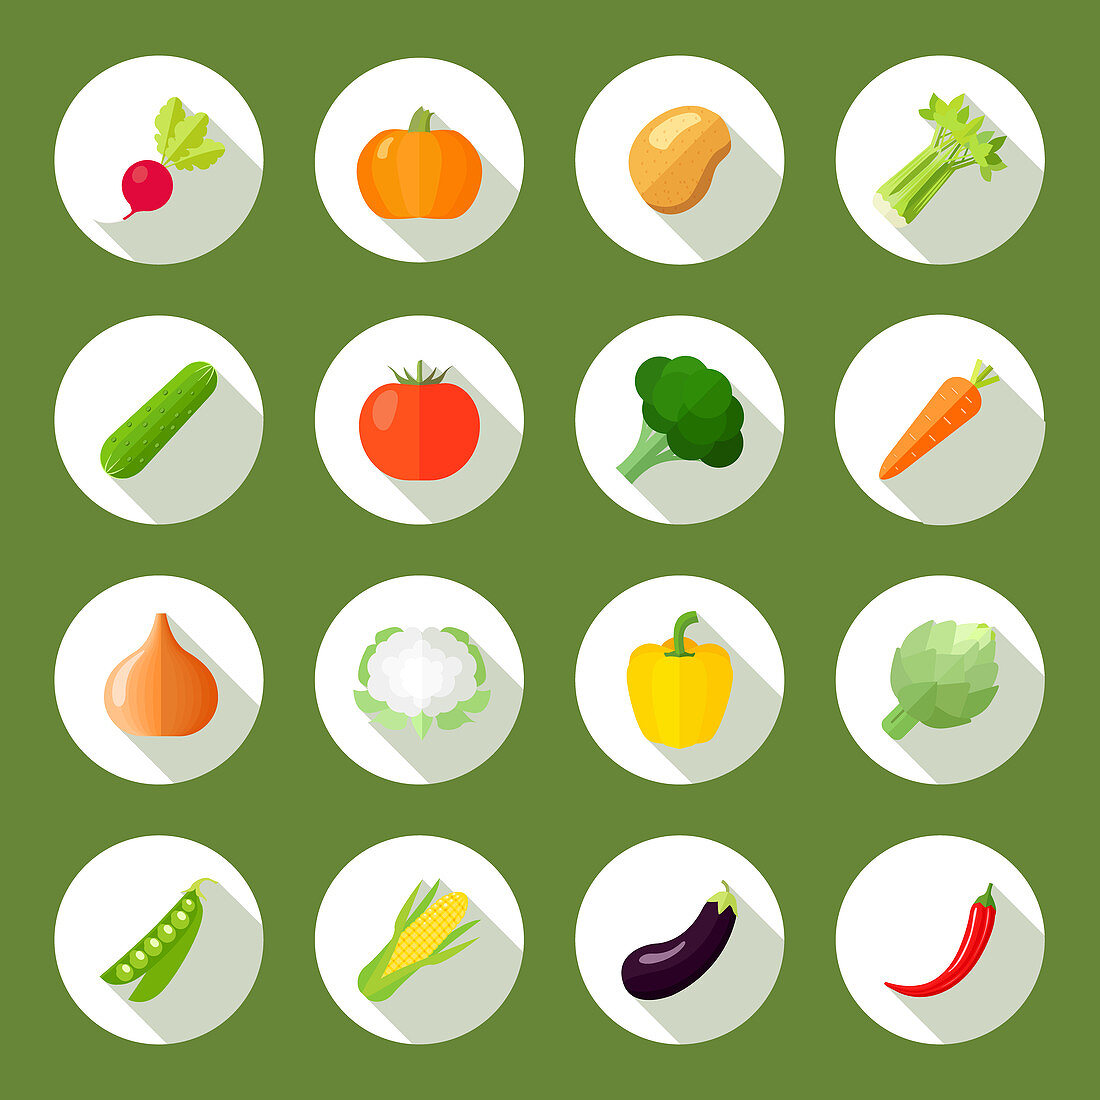 Vegetable icons, illustration